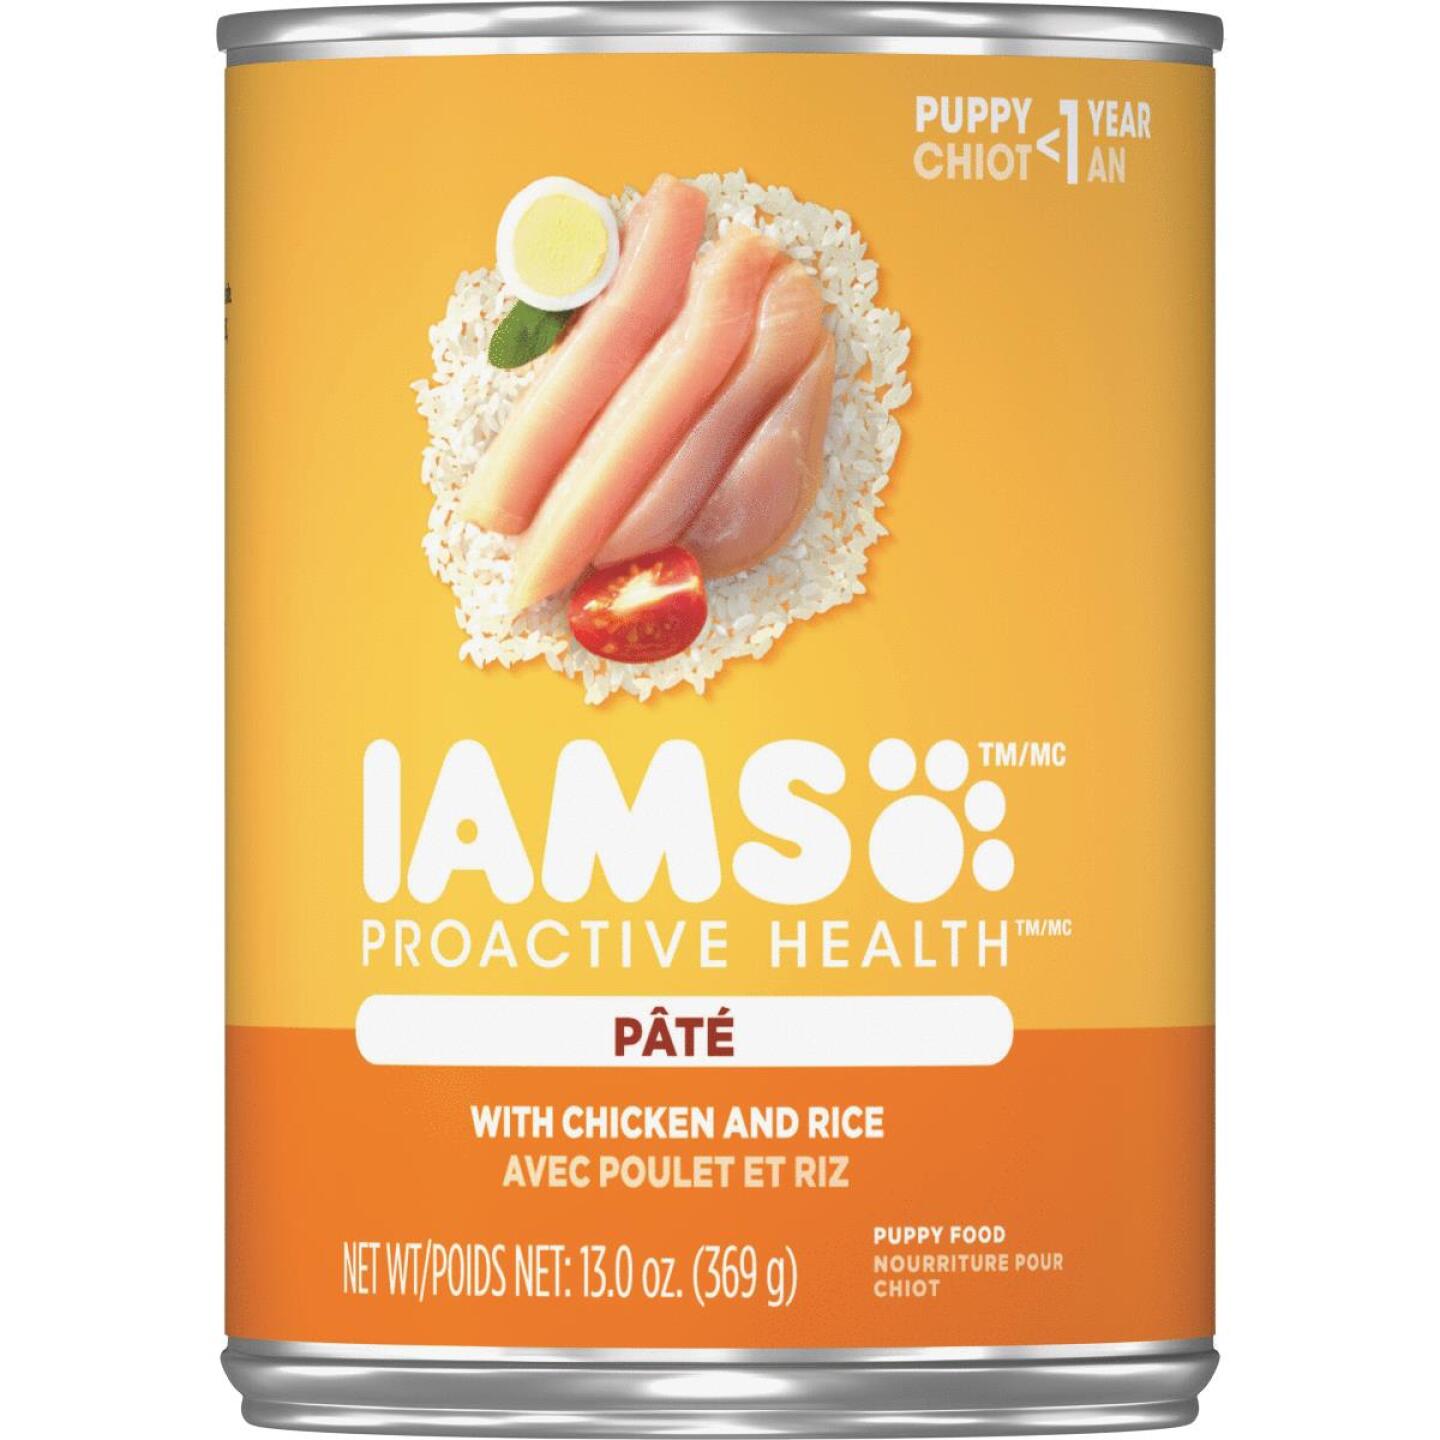 IAMS, IAMS Proactive Health Chicken & Rice Pate Puppy Food, 13 Oz.